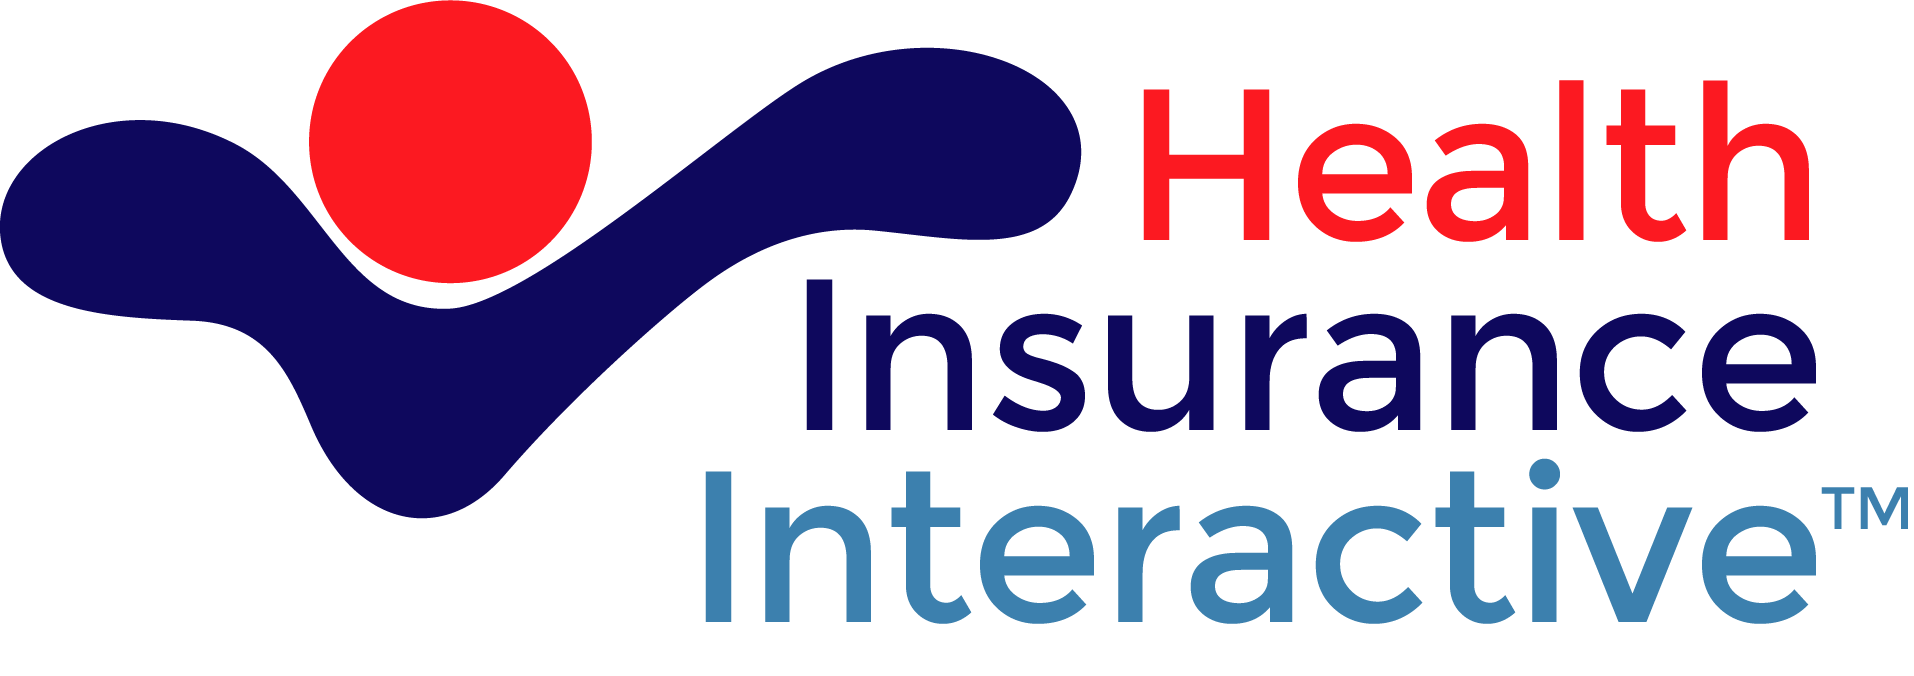 Health Insurance Interactive-Logo